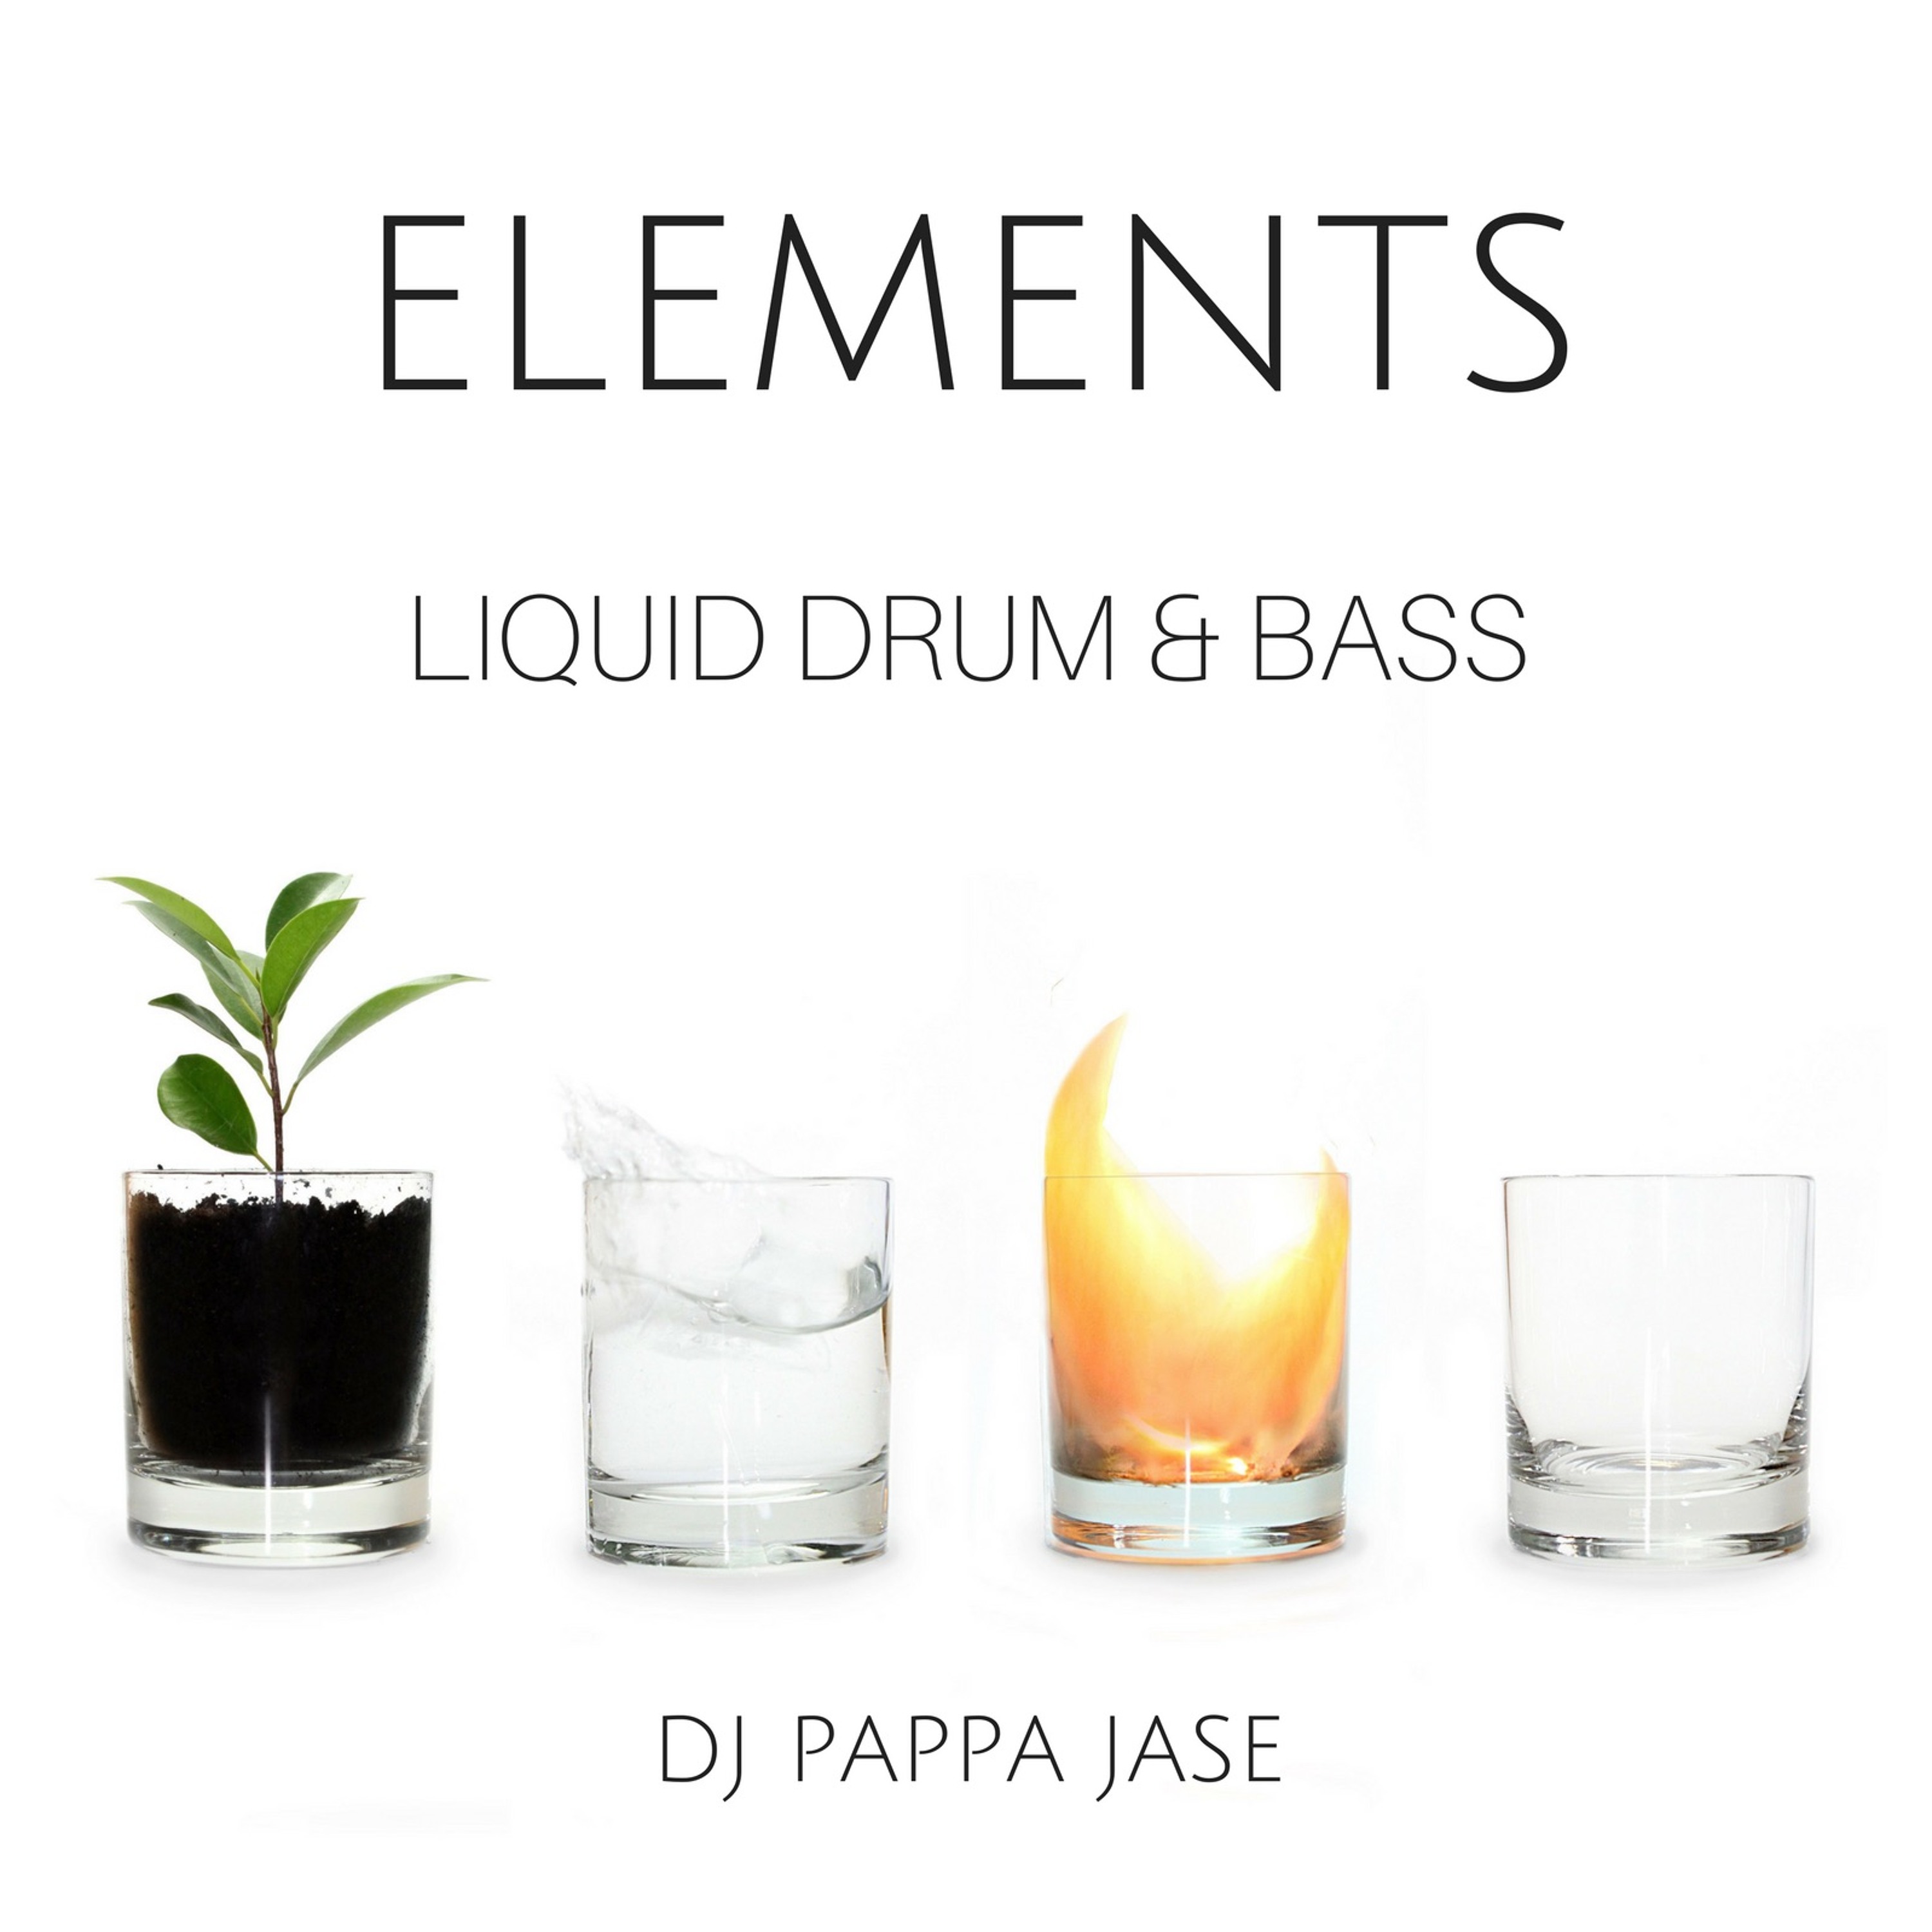 Elements - A Liquid Drum & Bass Podcast EP 18: Tribute to sunandbass Artwork